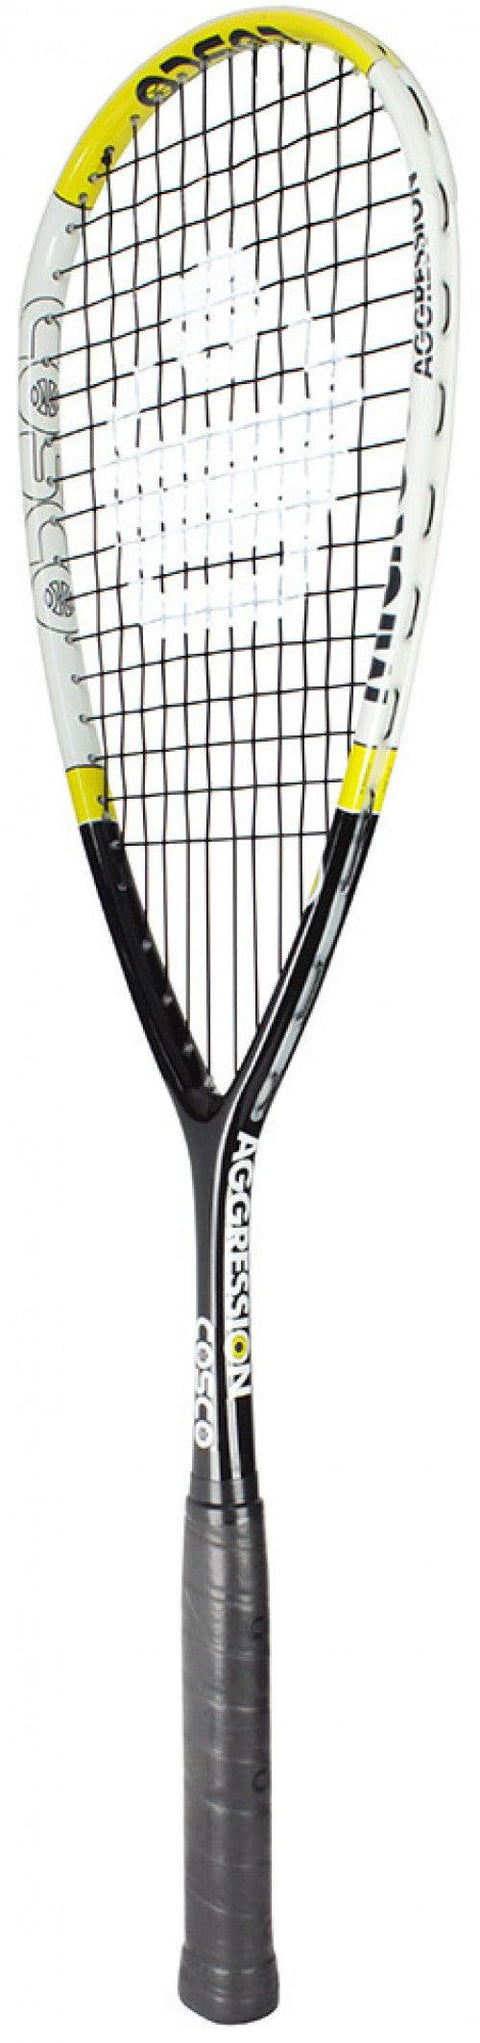 Cosco Laser CS 200 Squash Racket | KIBI Sports